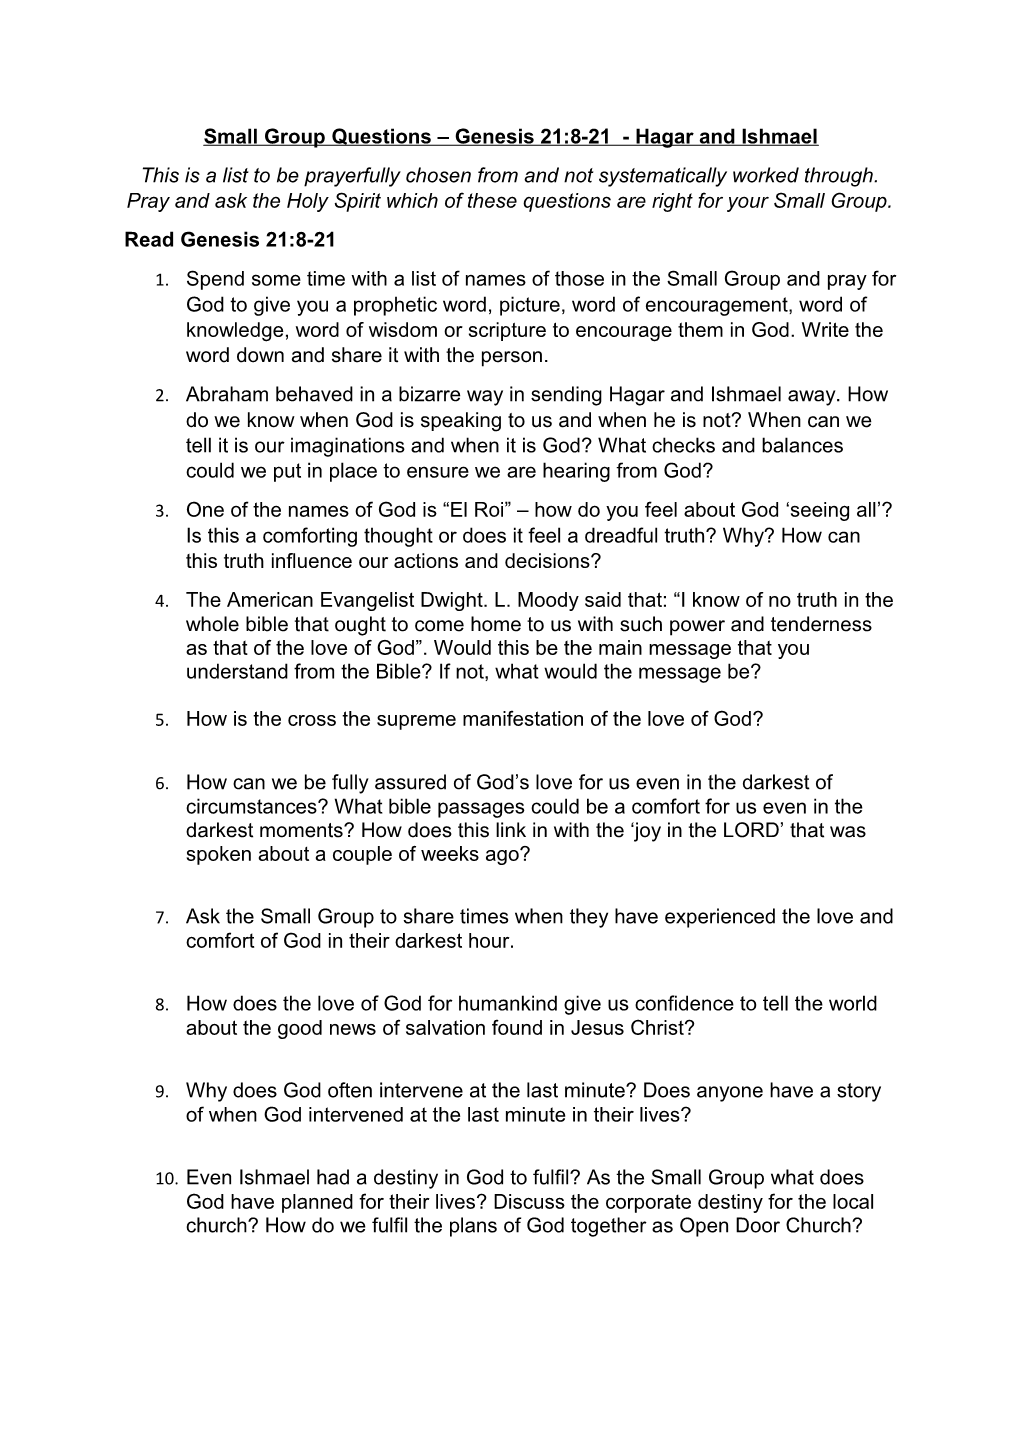 Small Group Questions Genesis 21:8-21 - Hagar and Ishmael